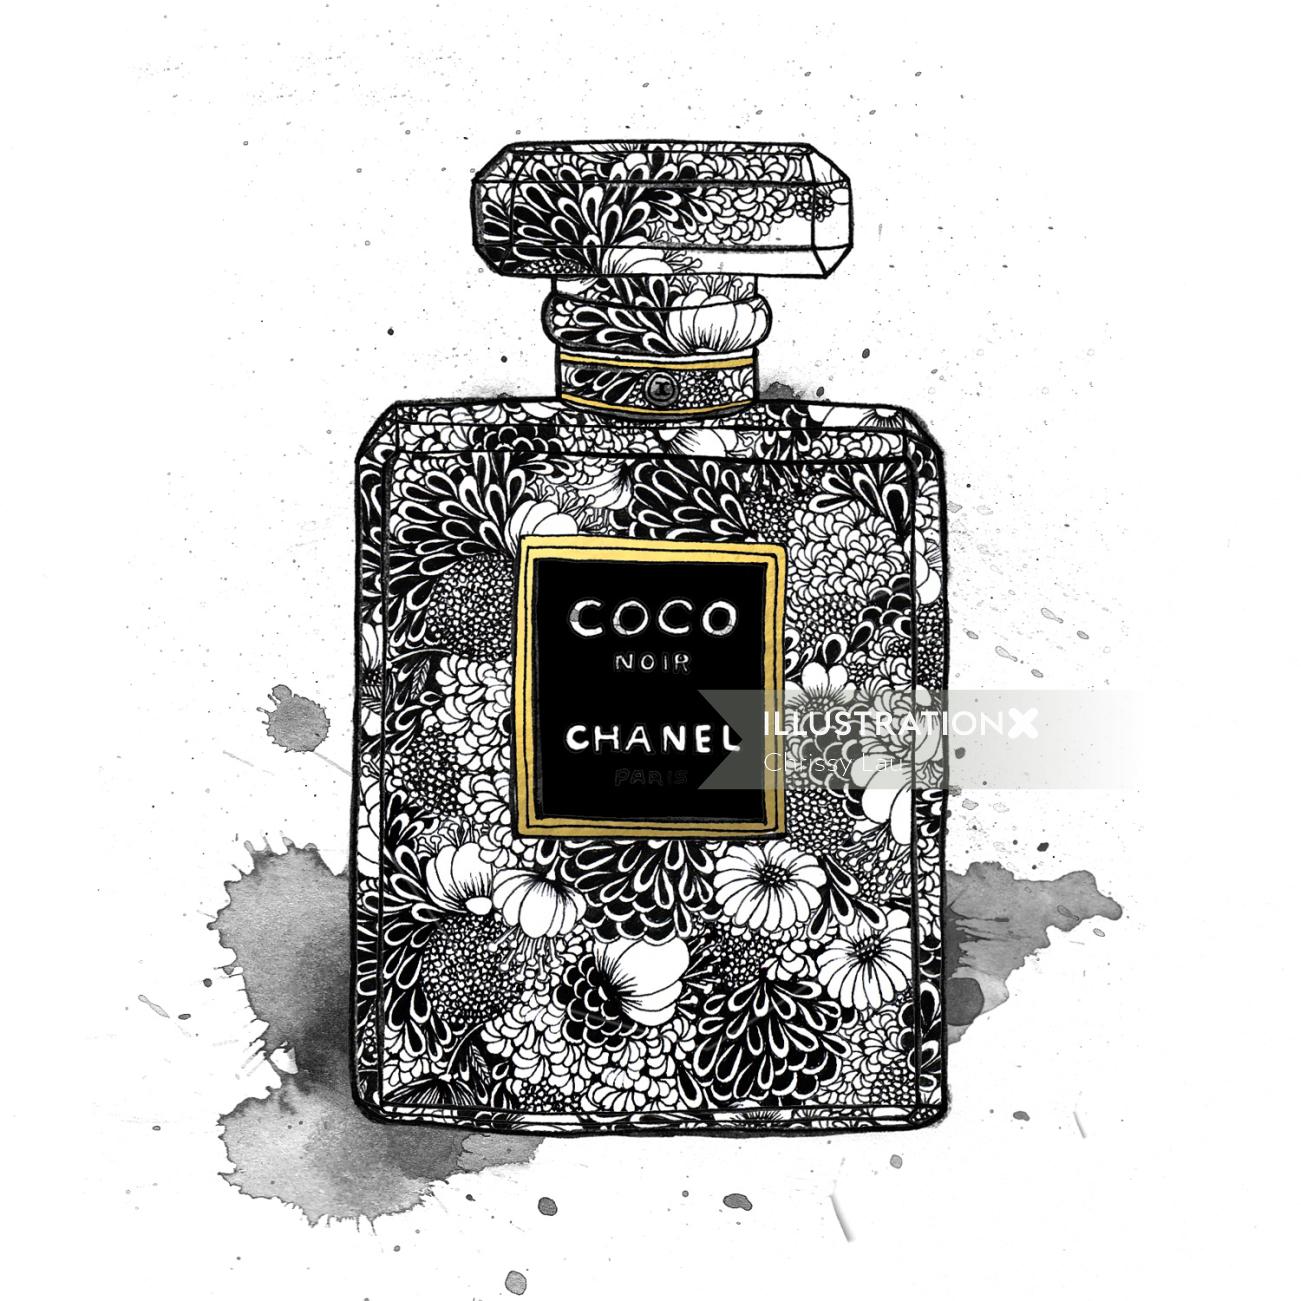 Chanel perfume bottle package illustration